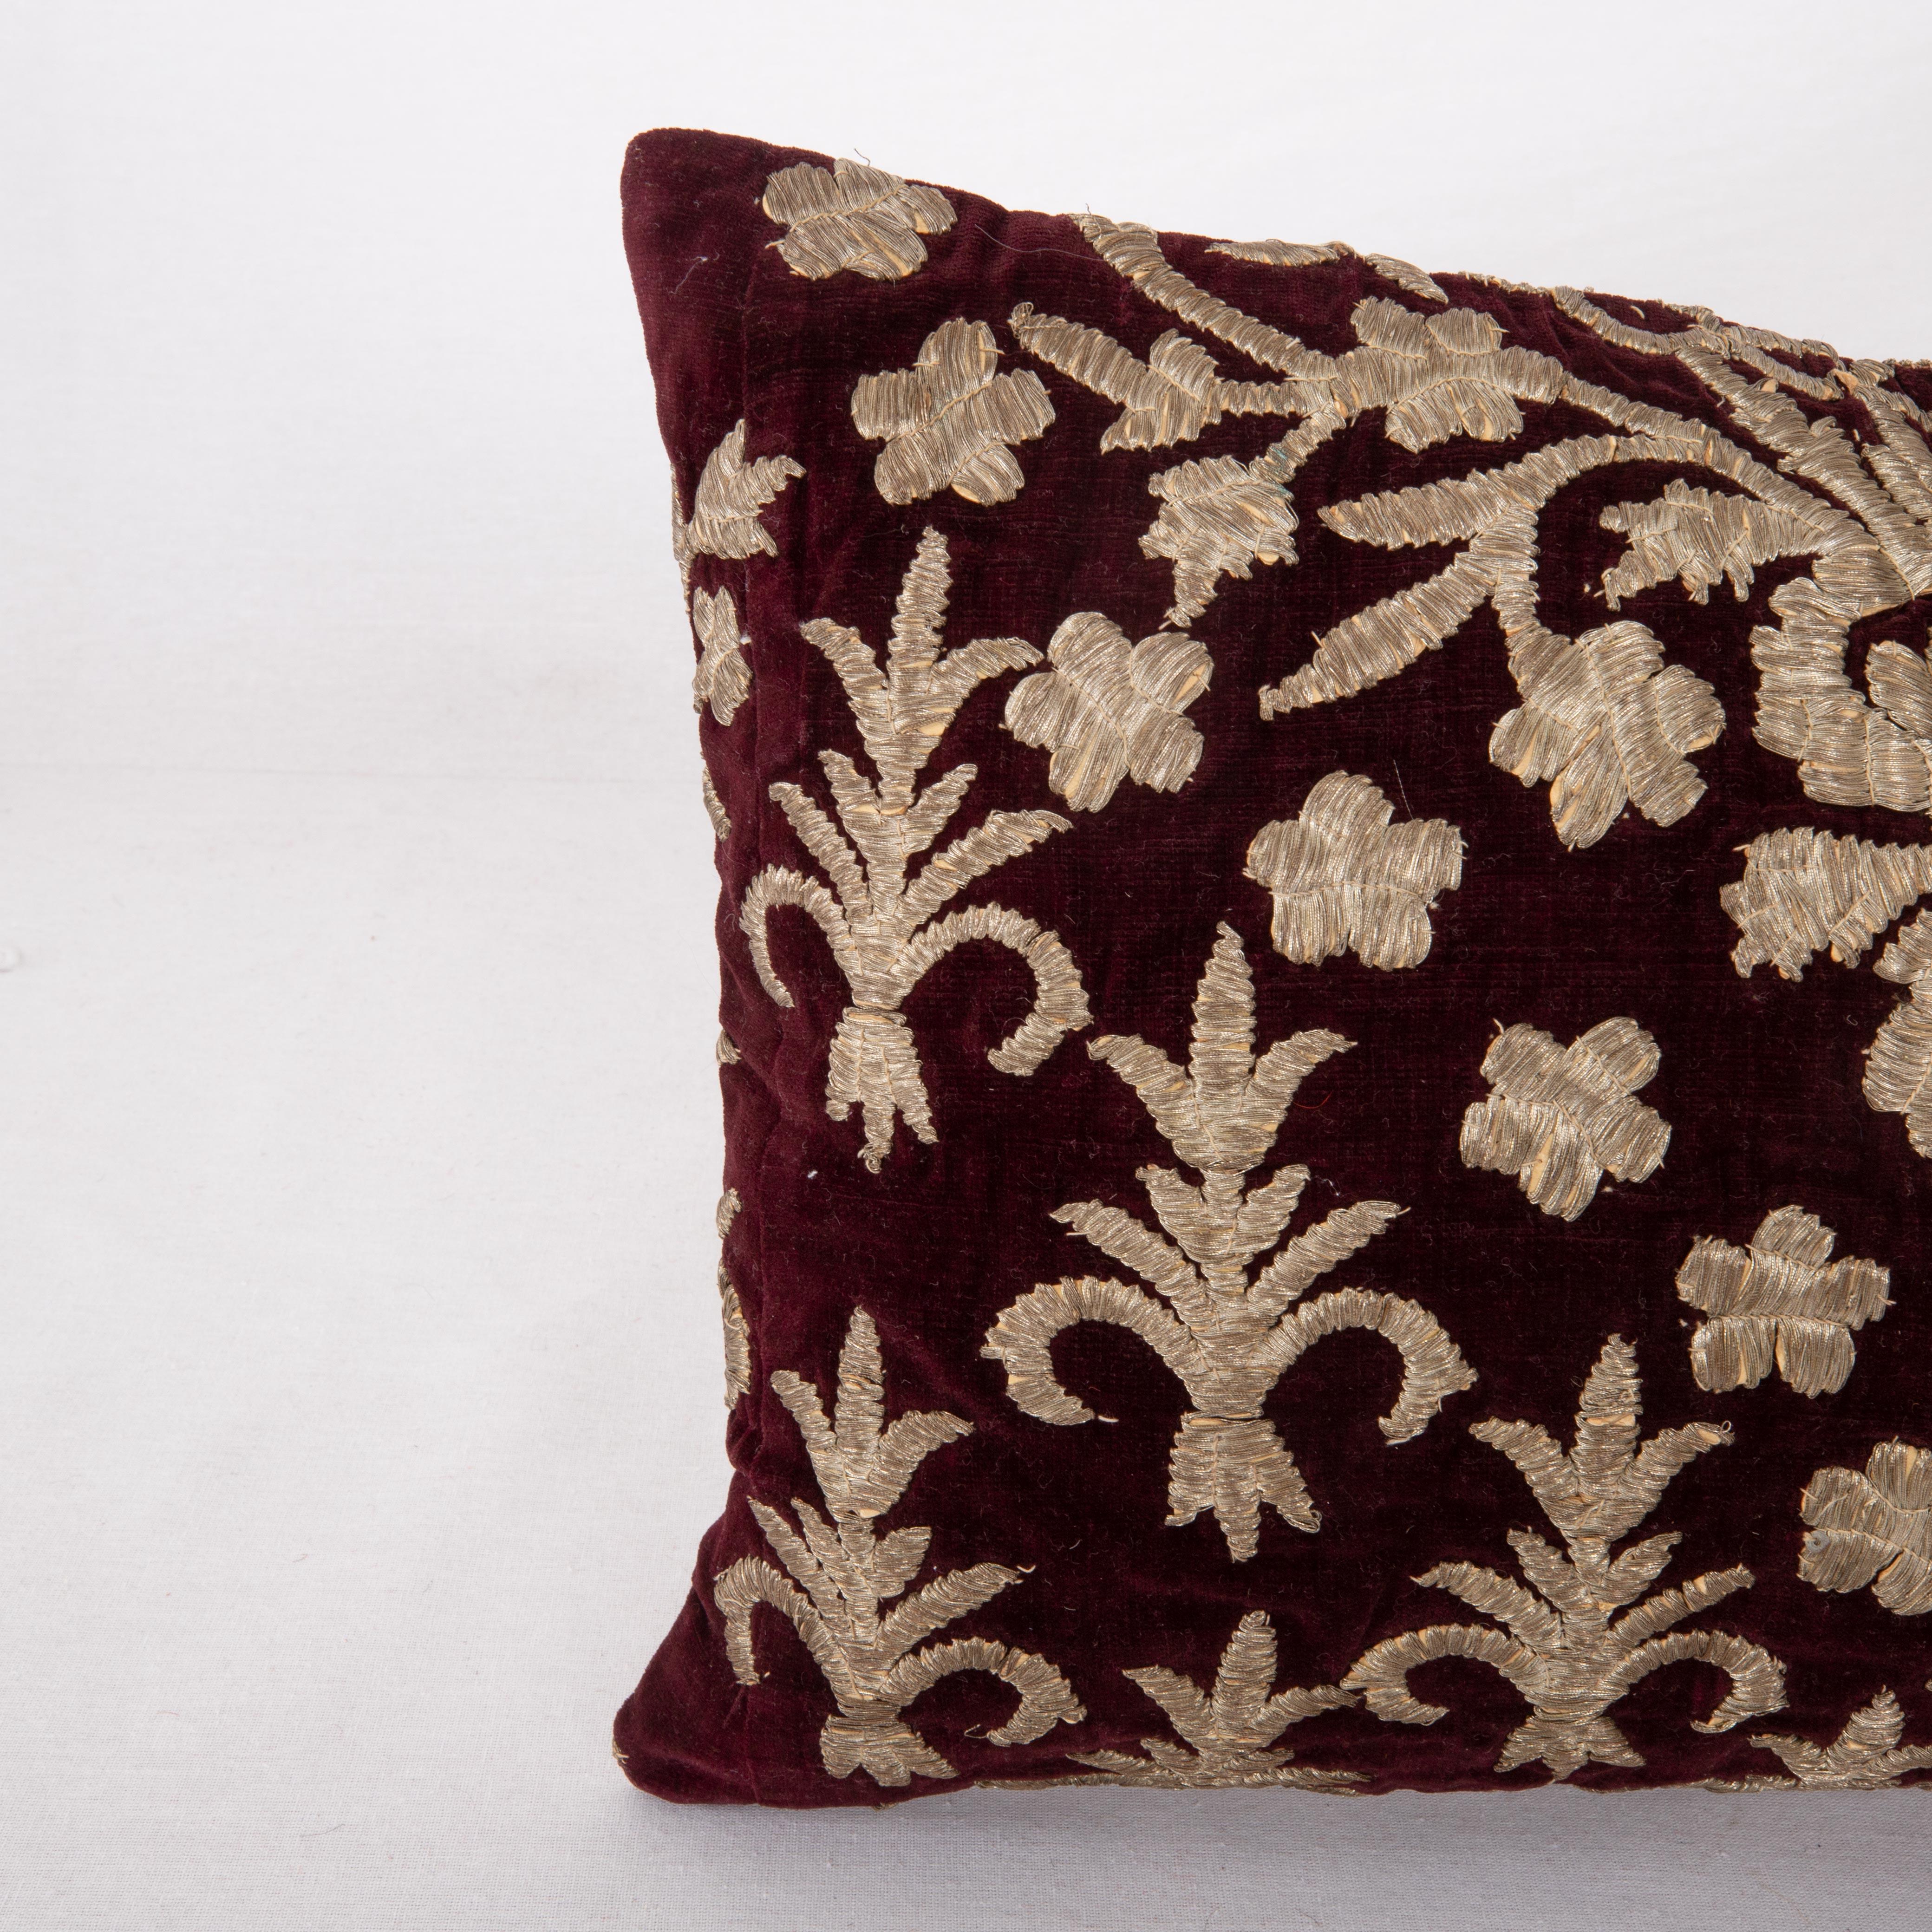 Islamic Antique Silk Velvet Ottoman Sarma Pillow Cover, L 19th C. / E 20th Century